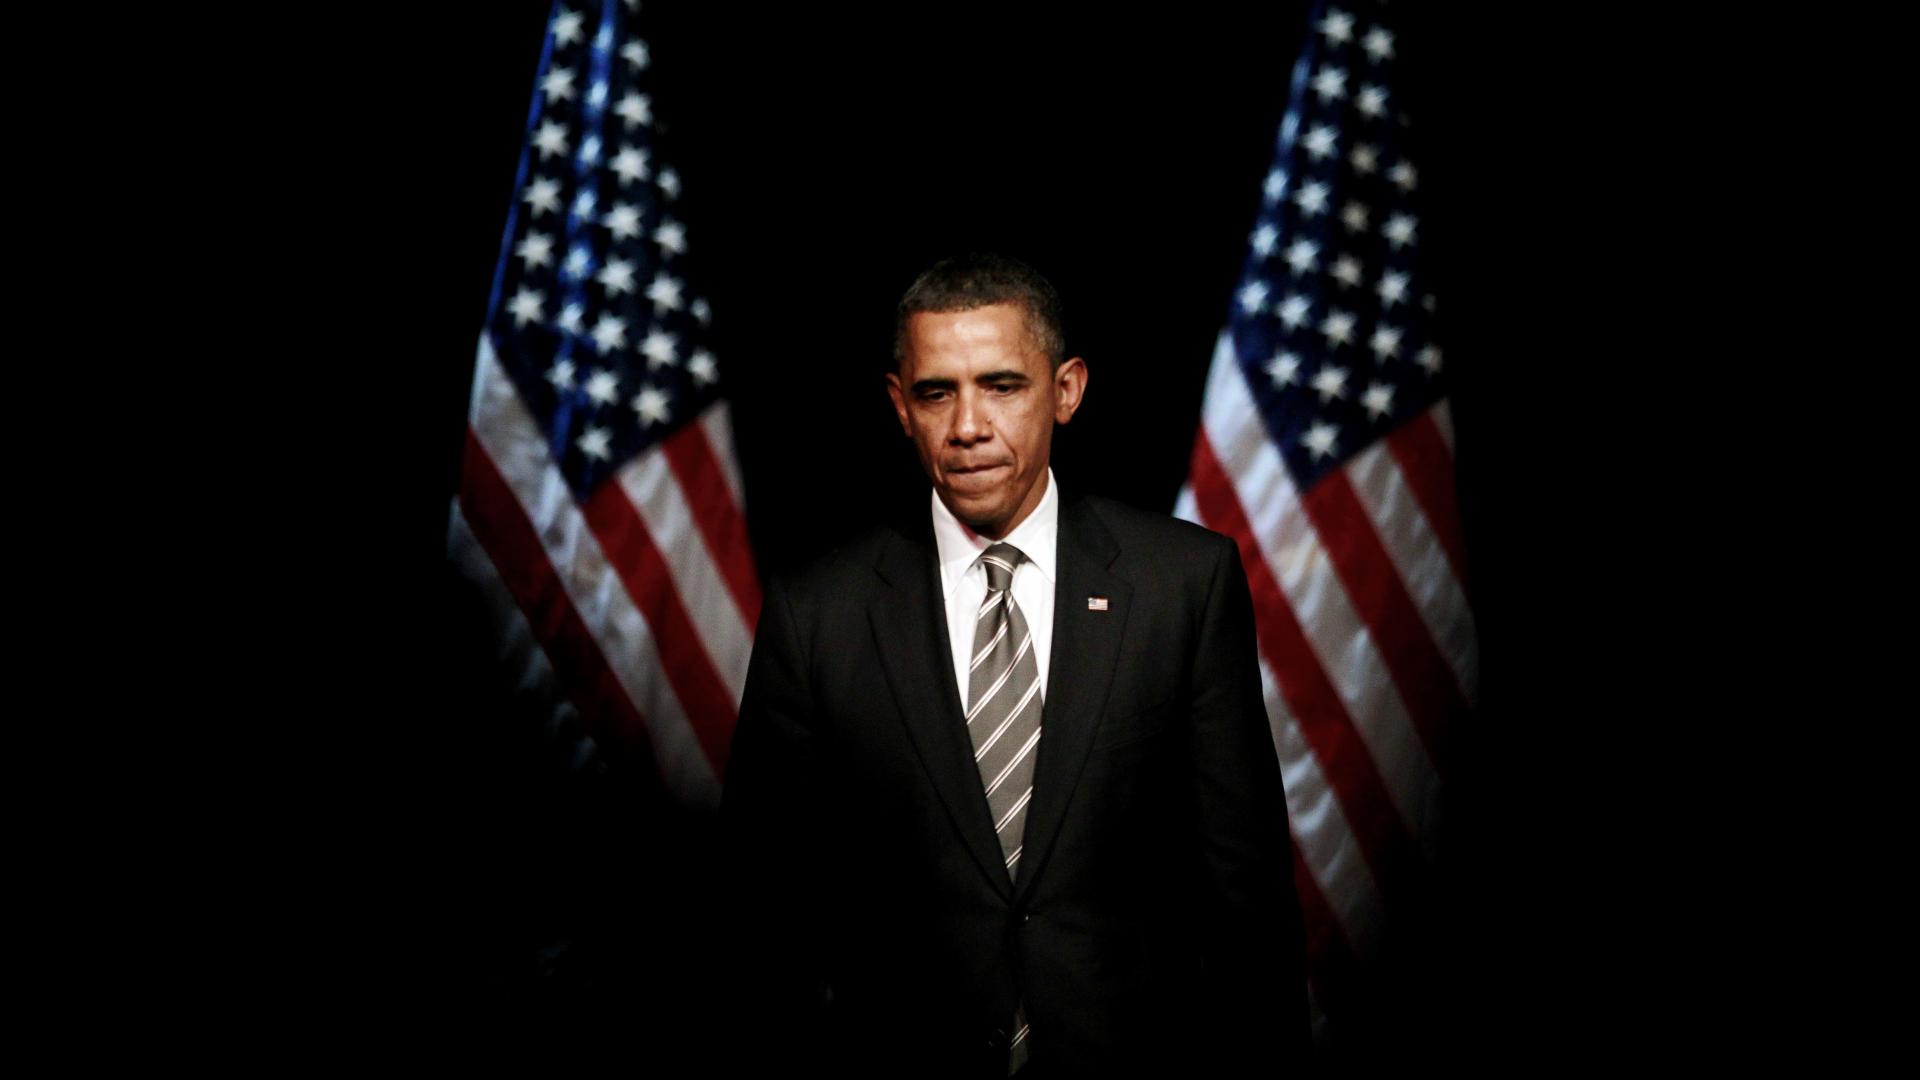 Obama Wallpaper HD 2014